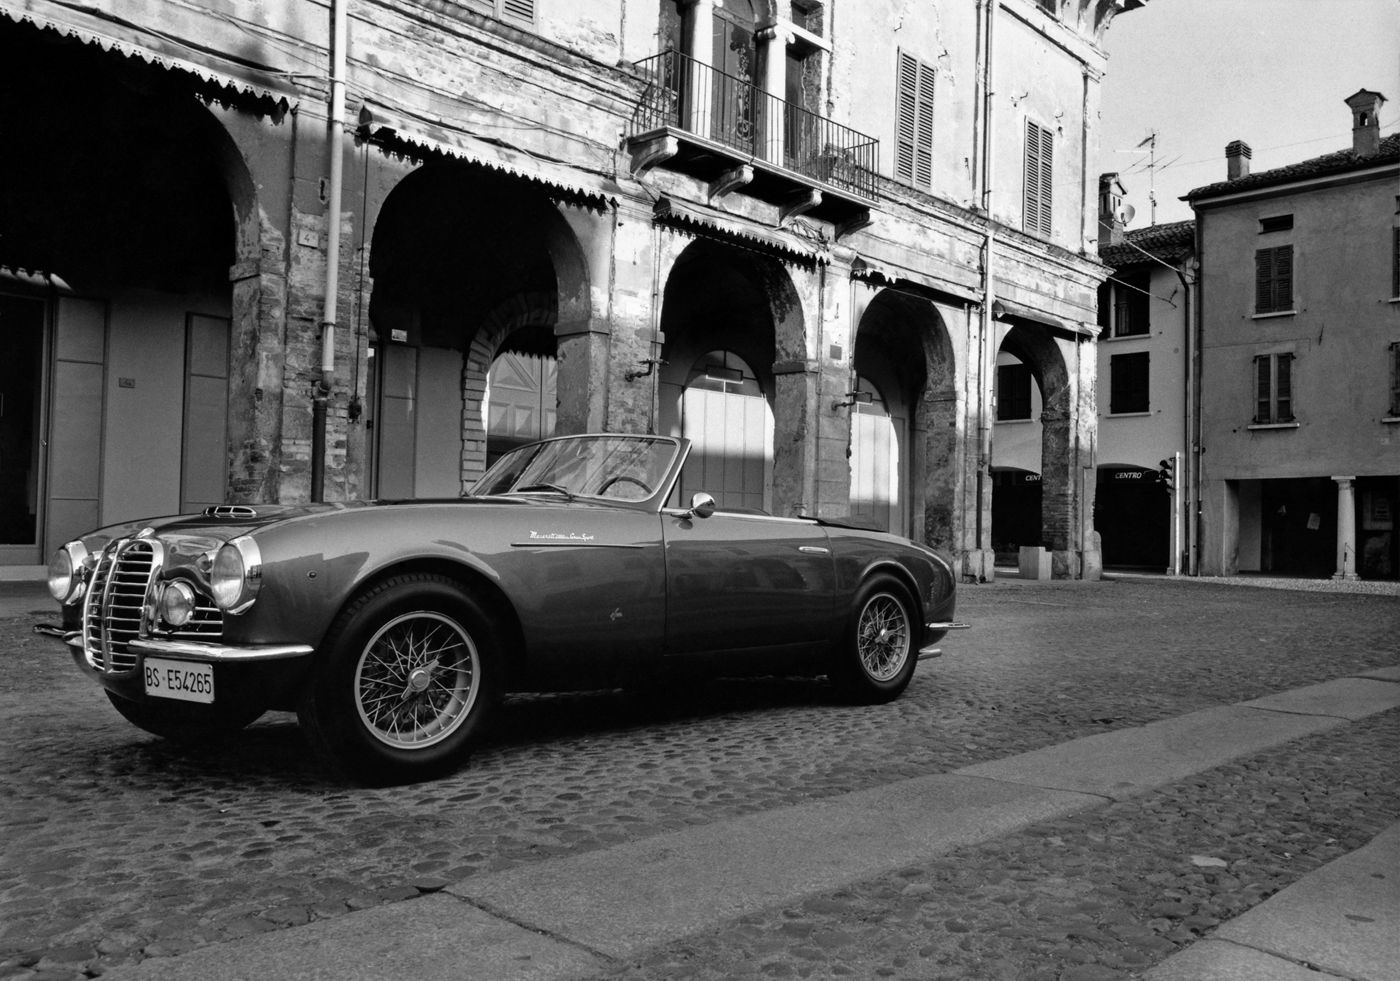 1950 Maserati A6G 2000 - the classic sports car model on Italian street